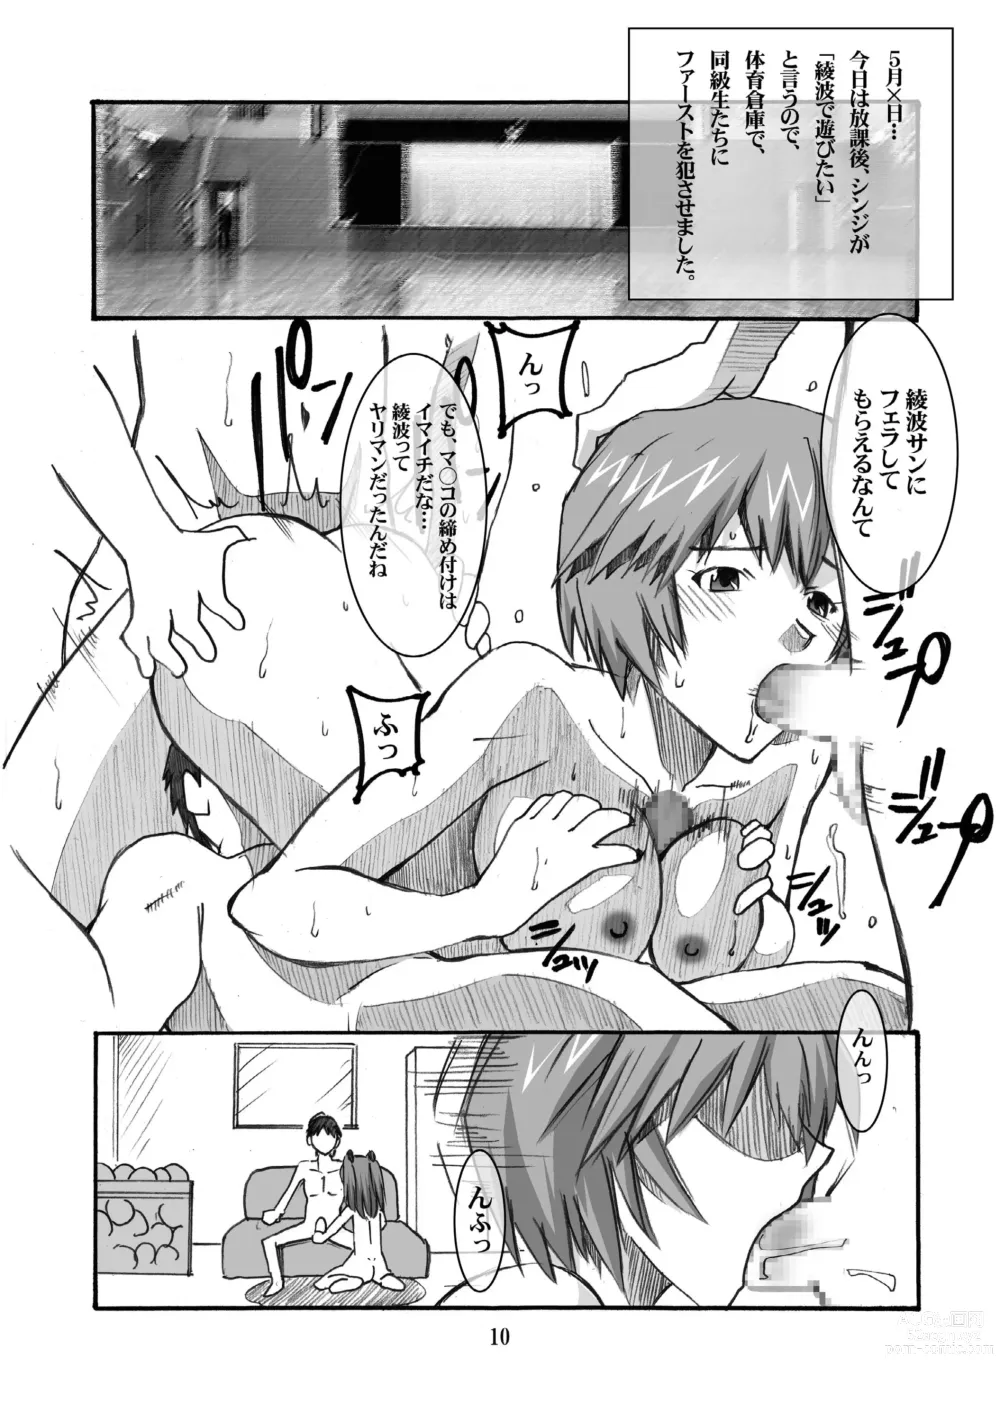 Page 10 of doujinshi Asukas Diary 01